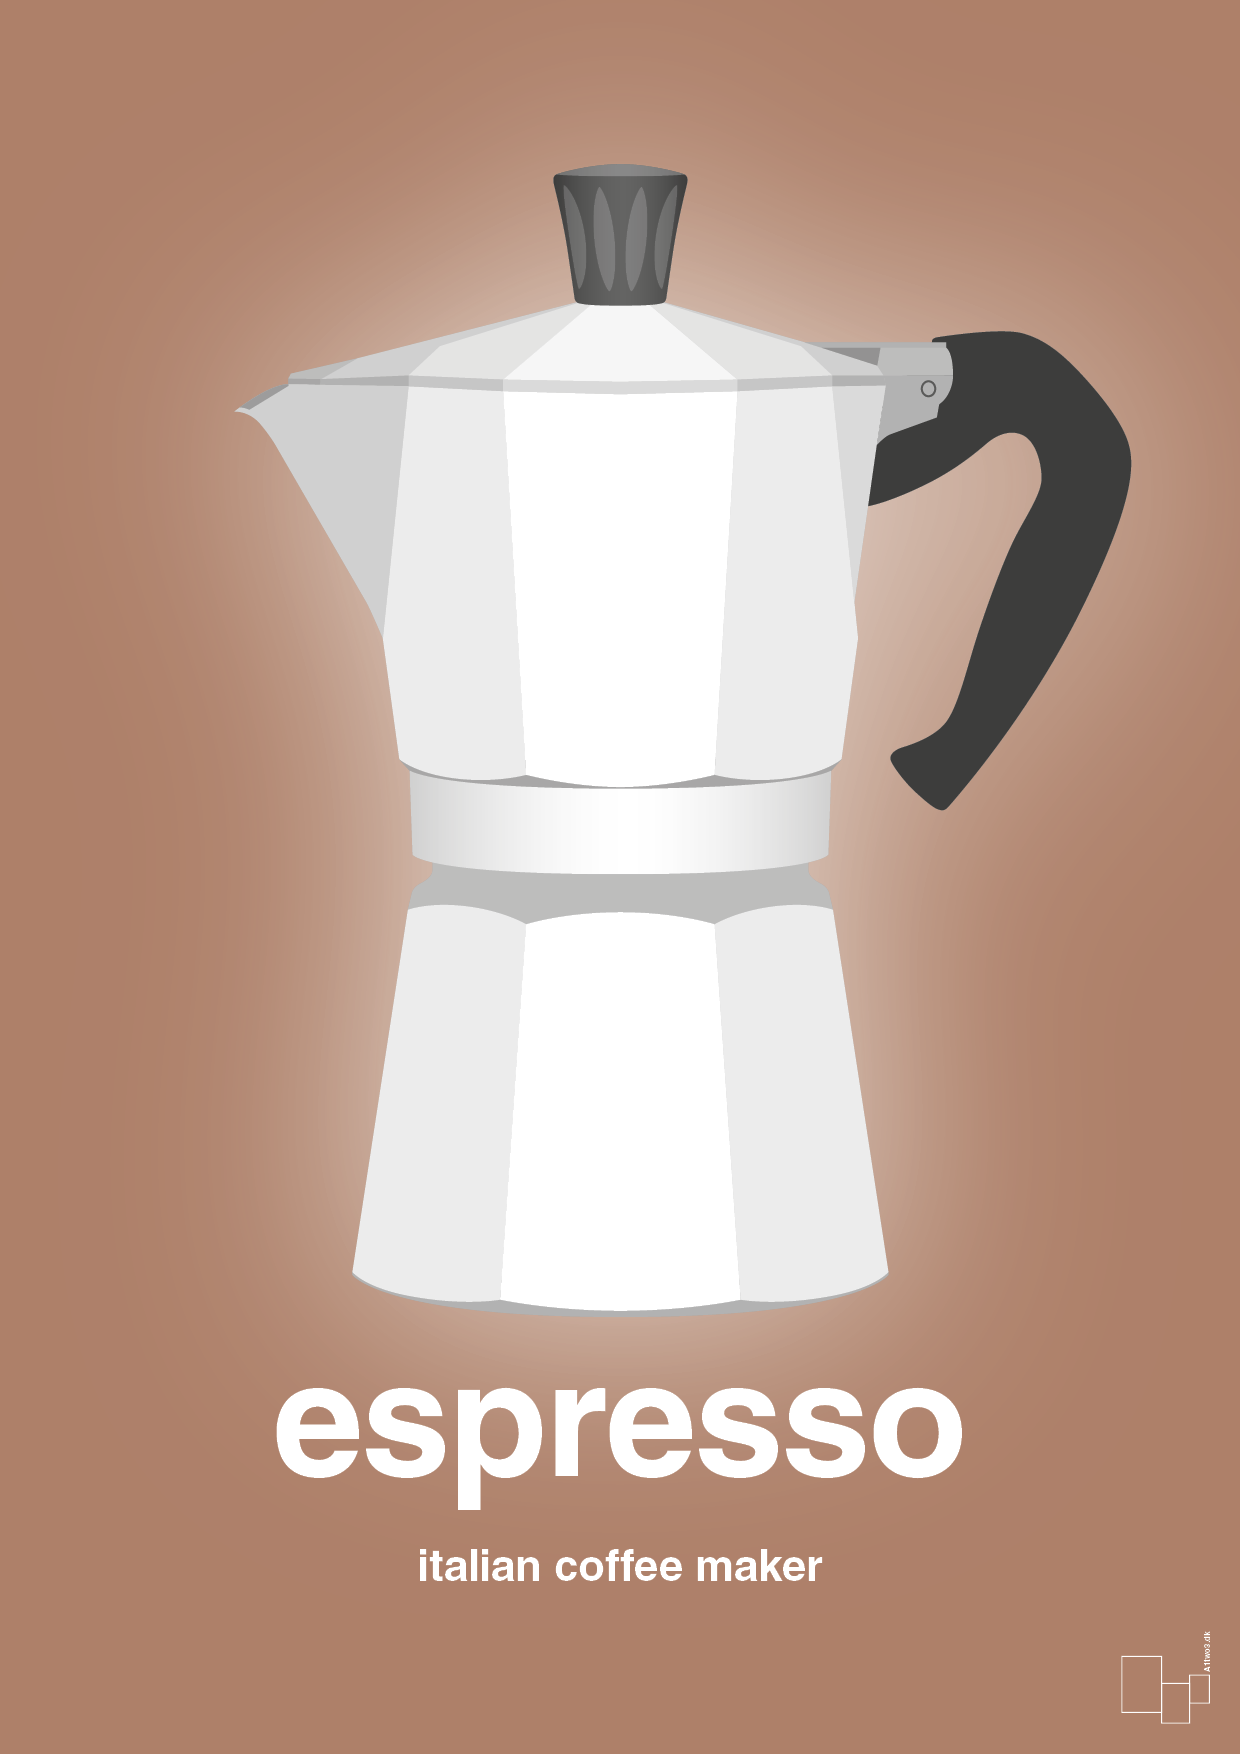 espresso - italian coffee maker - Plakat med Mad & Drikke i Cider Spice